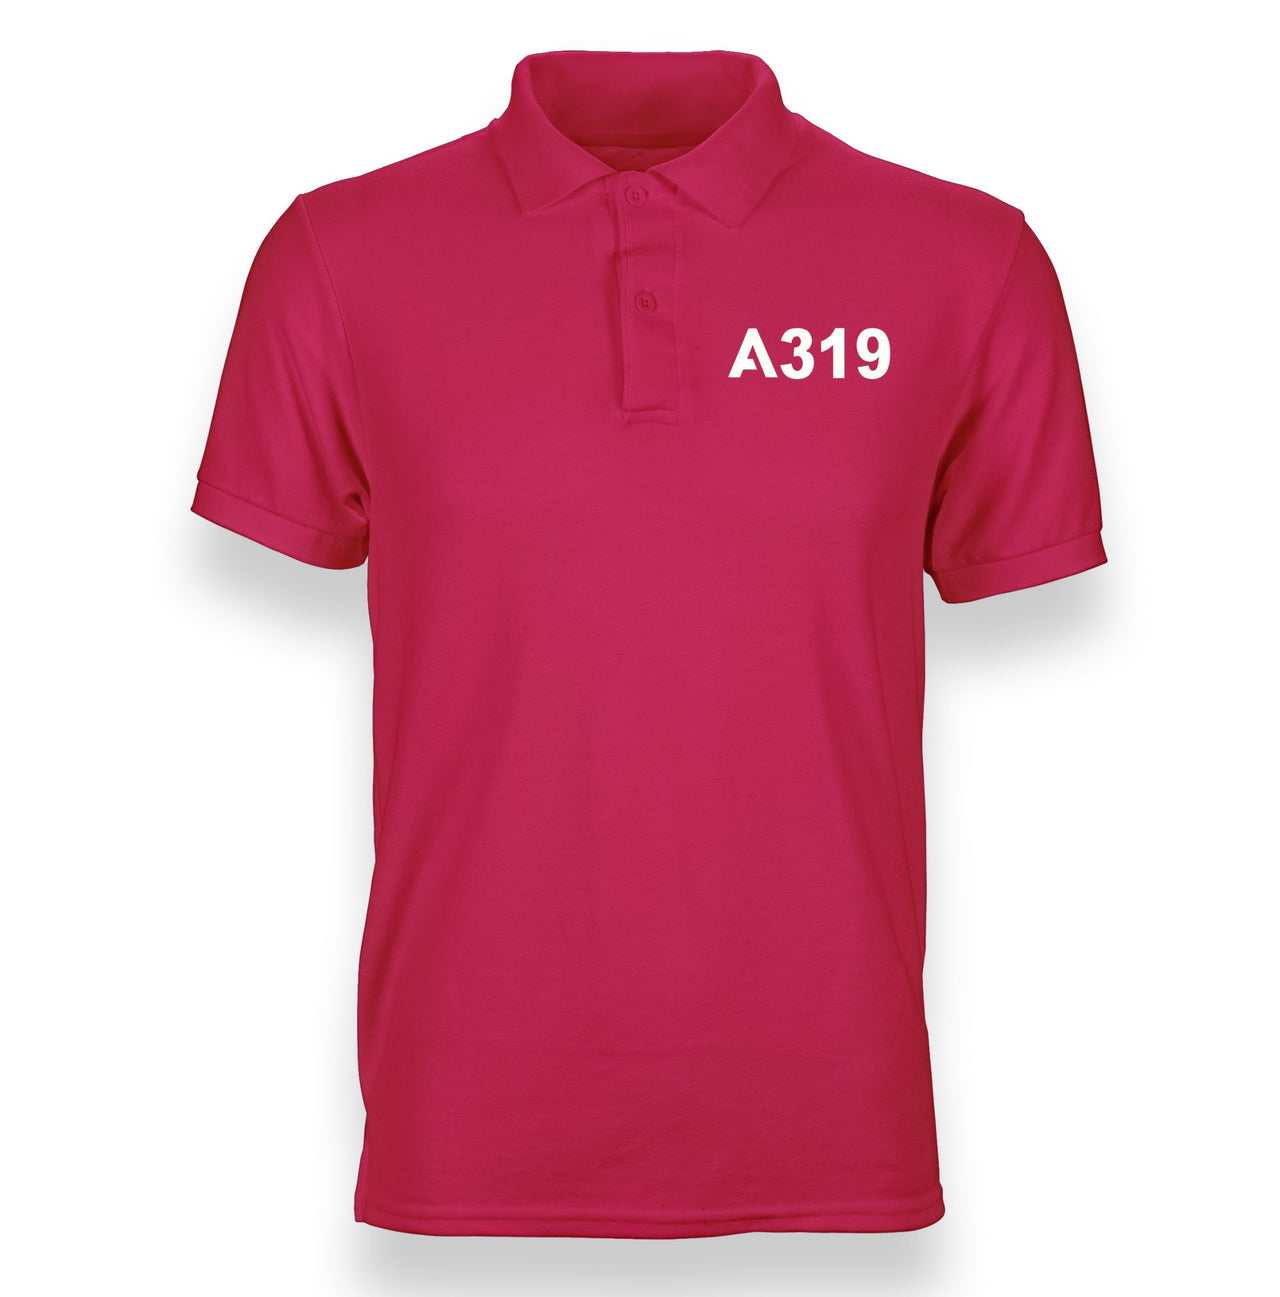 A319 Flat Text Designed "WOMEN" Polo T-Shirts